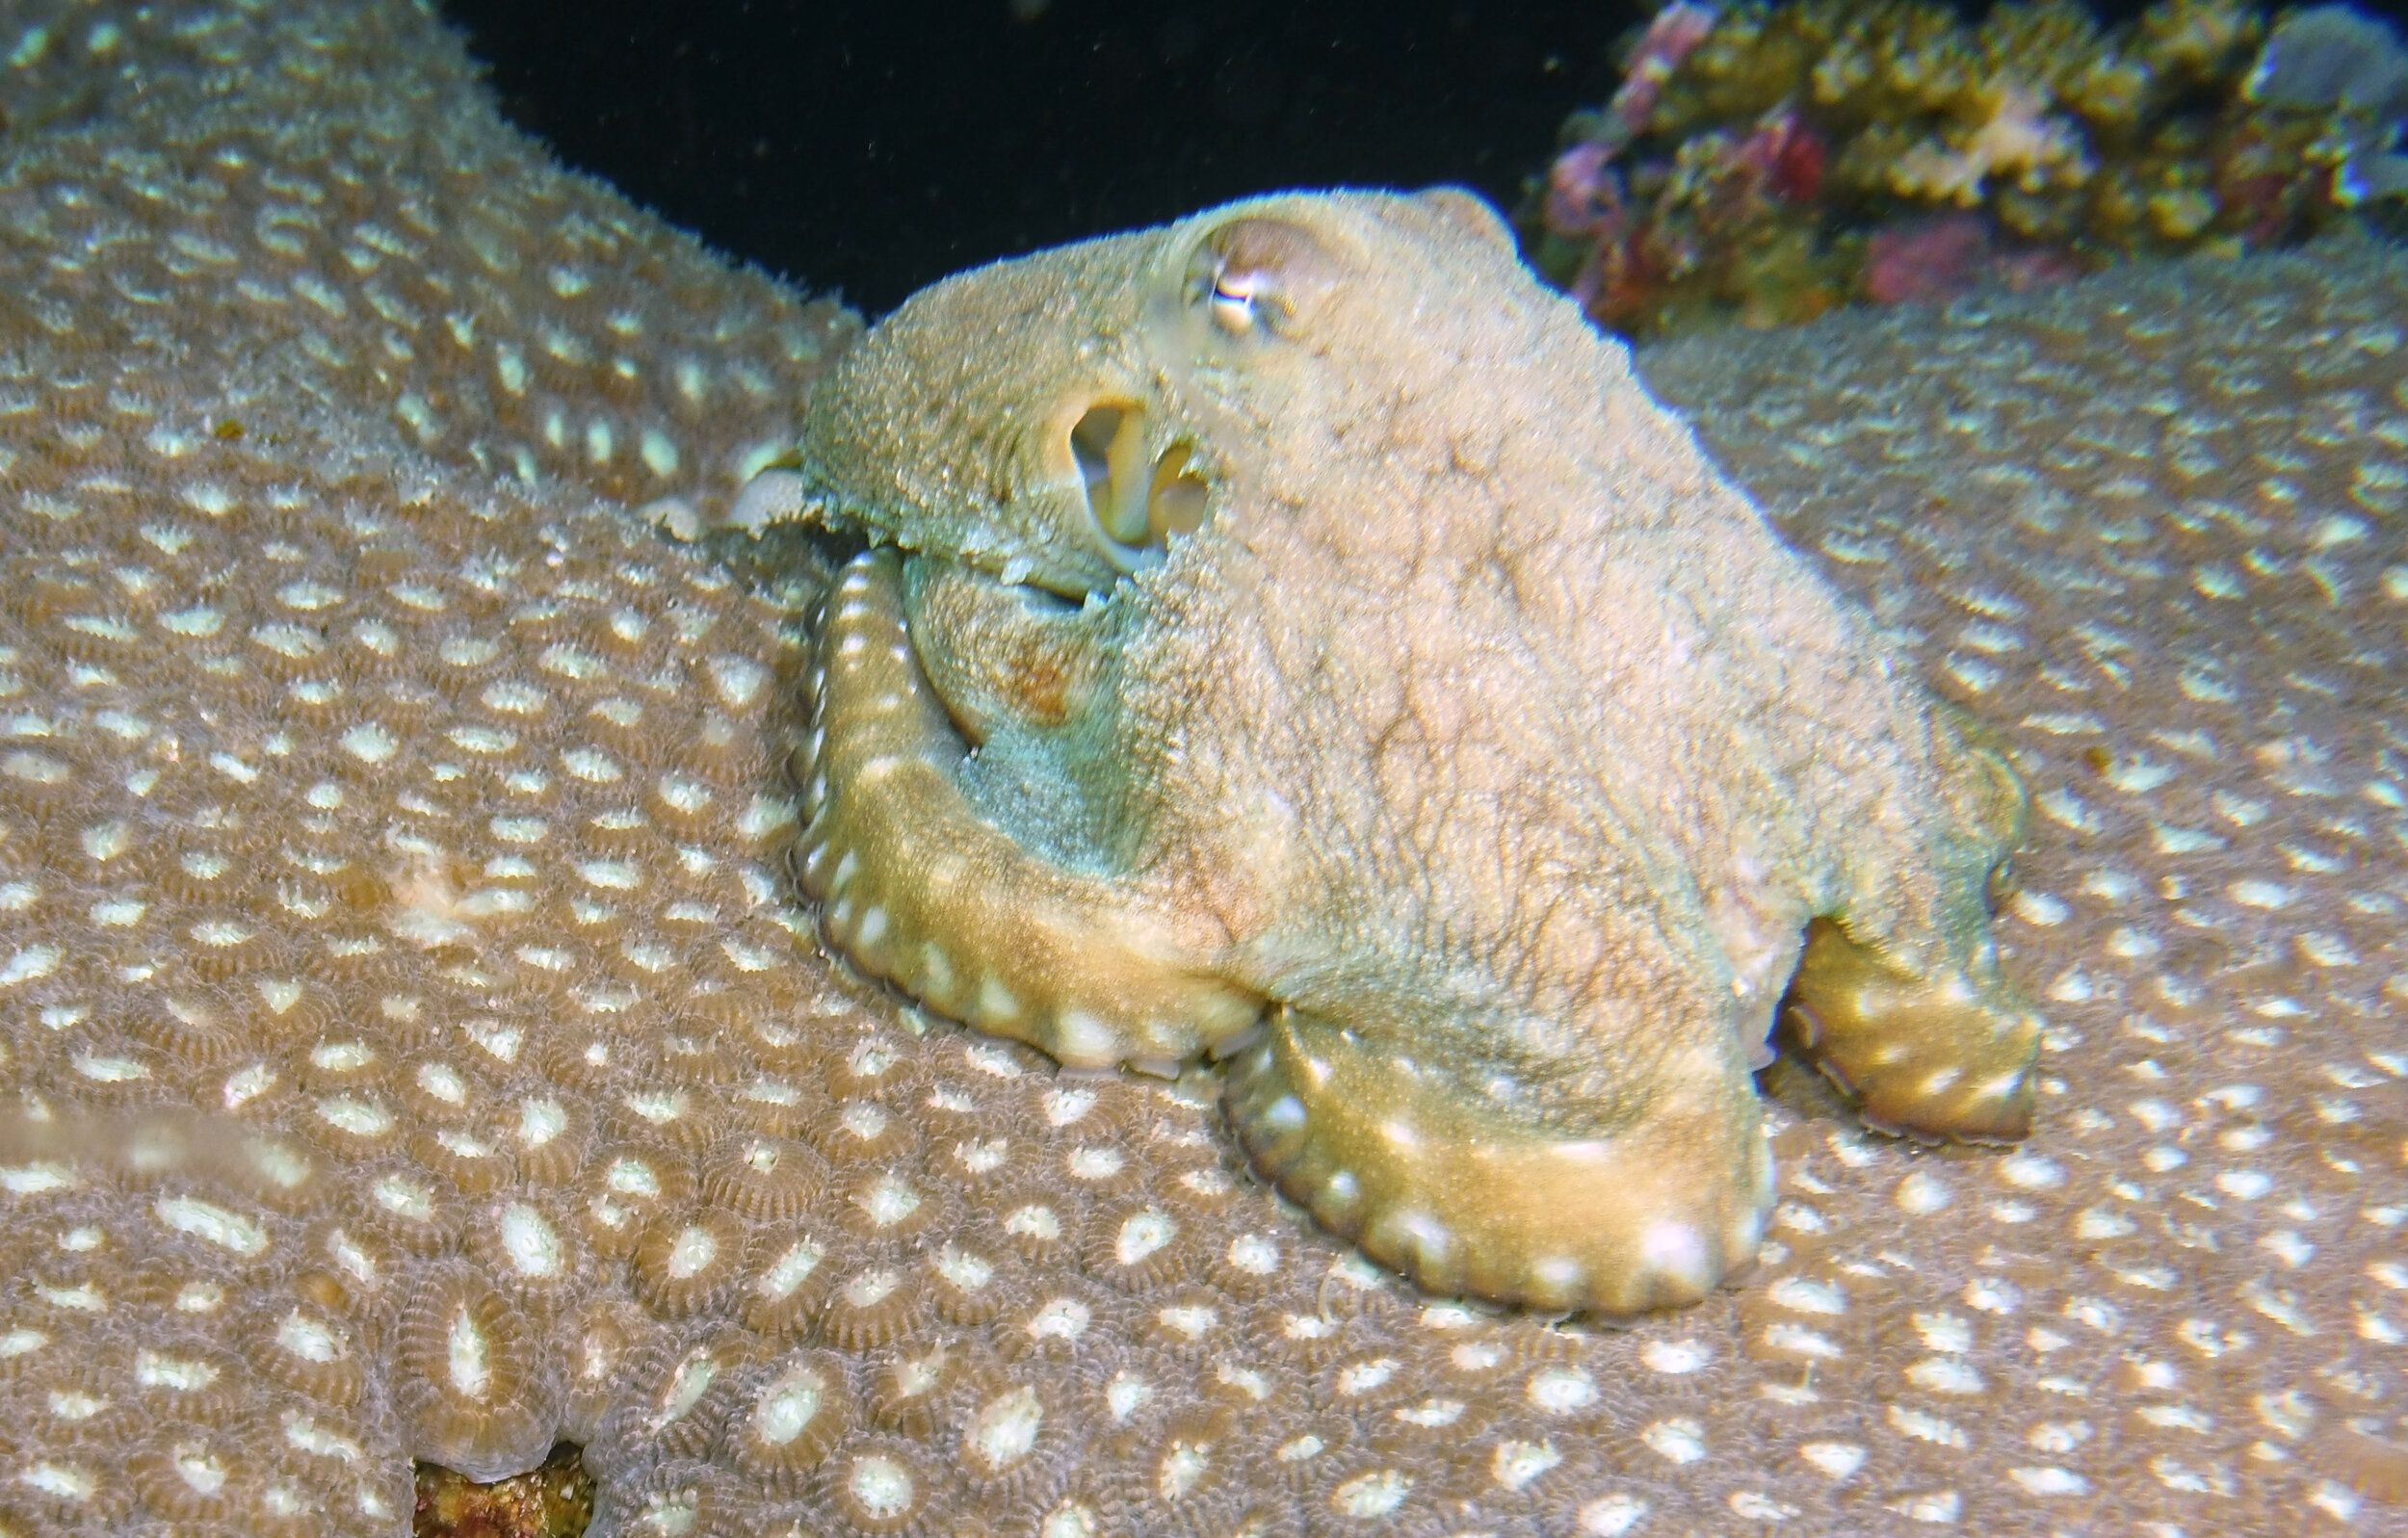  Octopus 